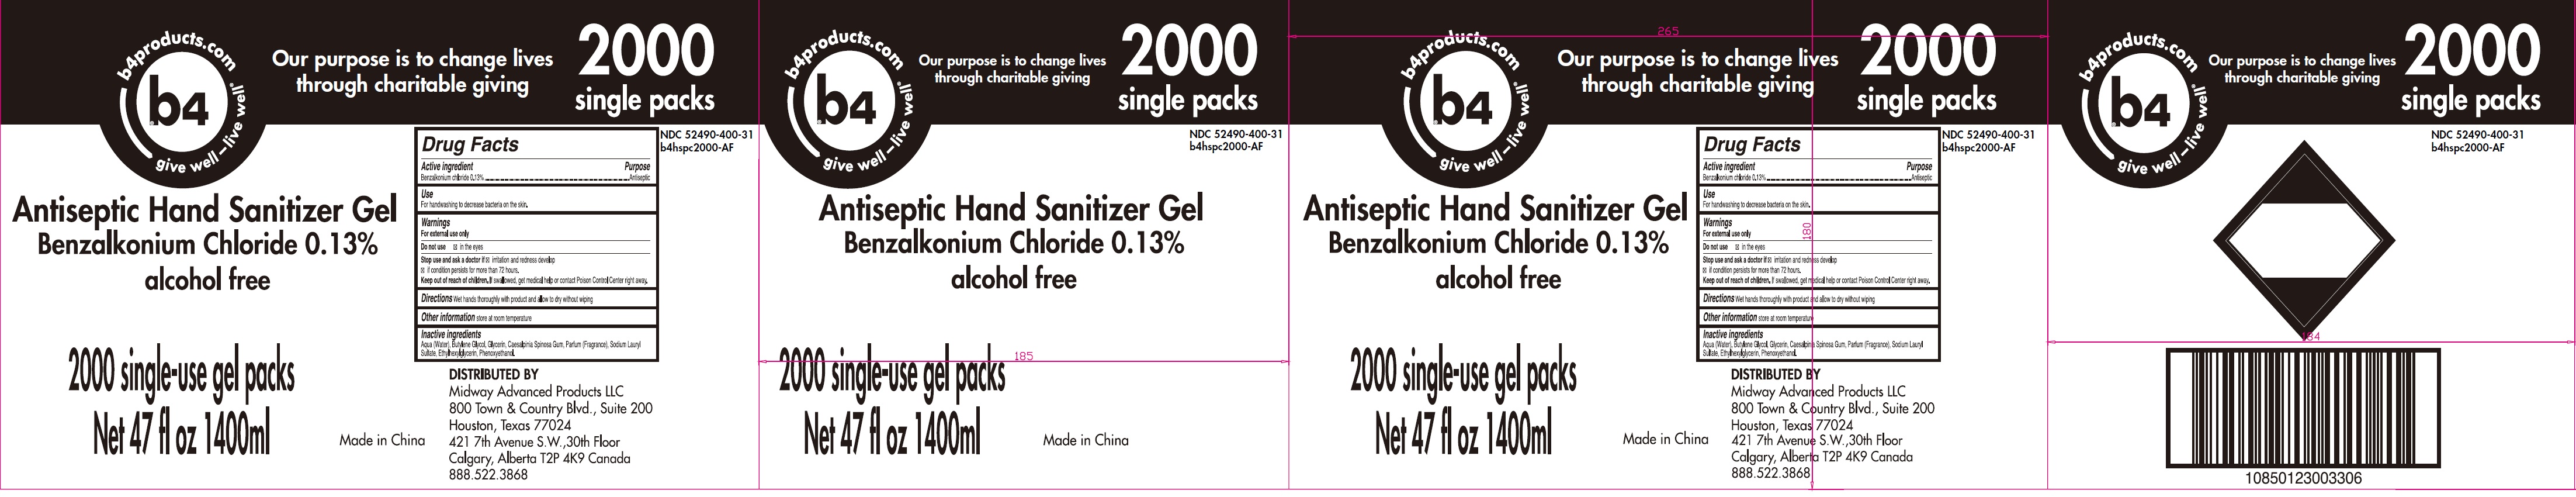 52490-500-31 label